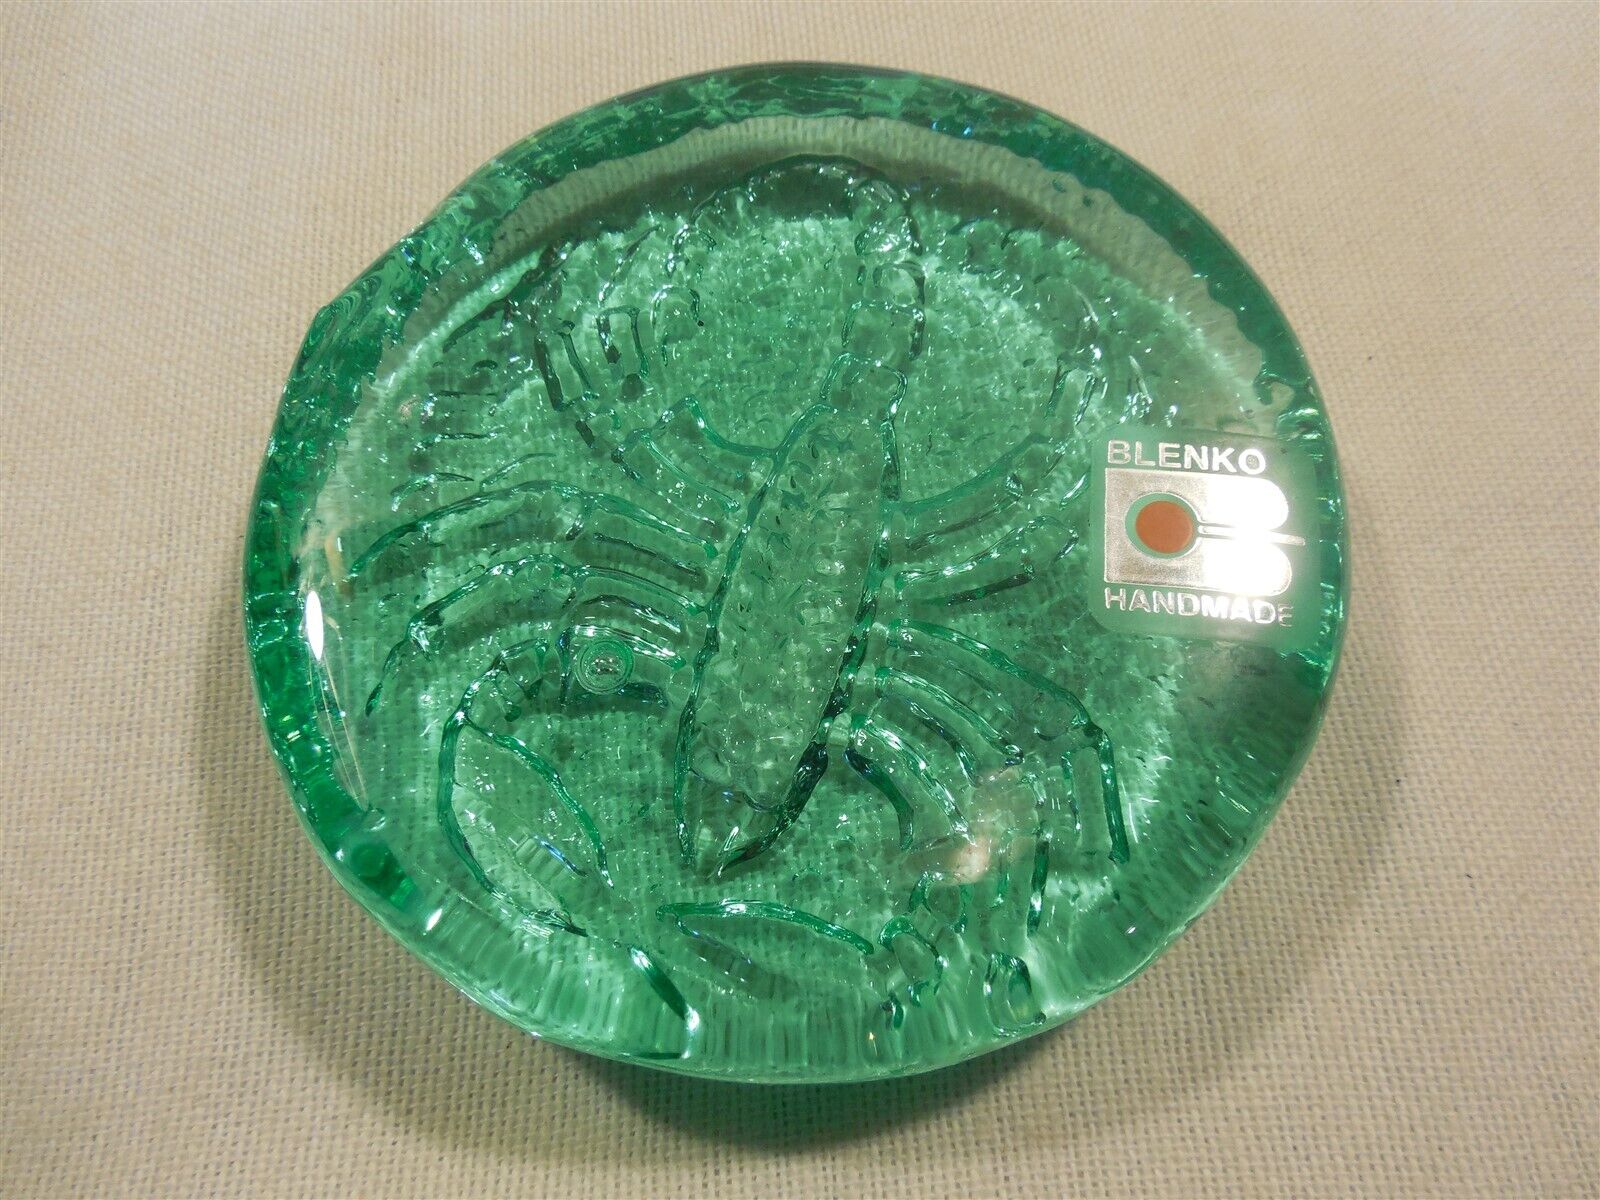 Vintage Blenko Green Glass Scorpio Zodiac Scropion Paperweight with Label